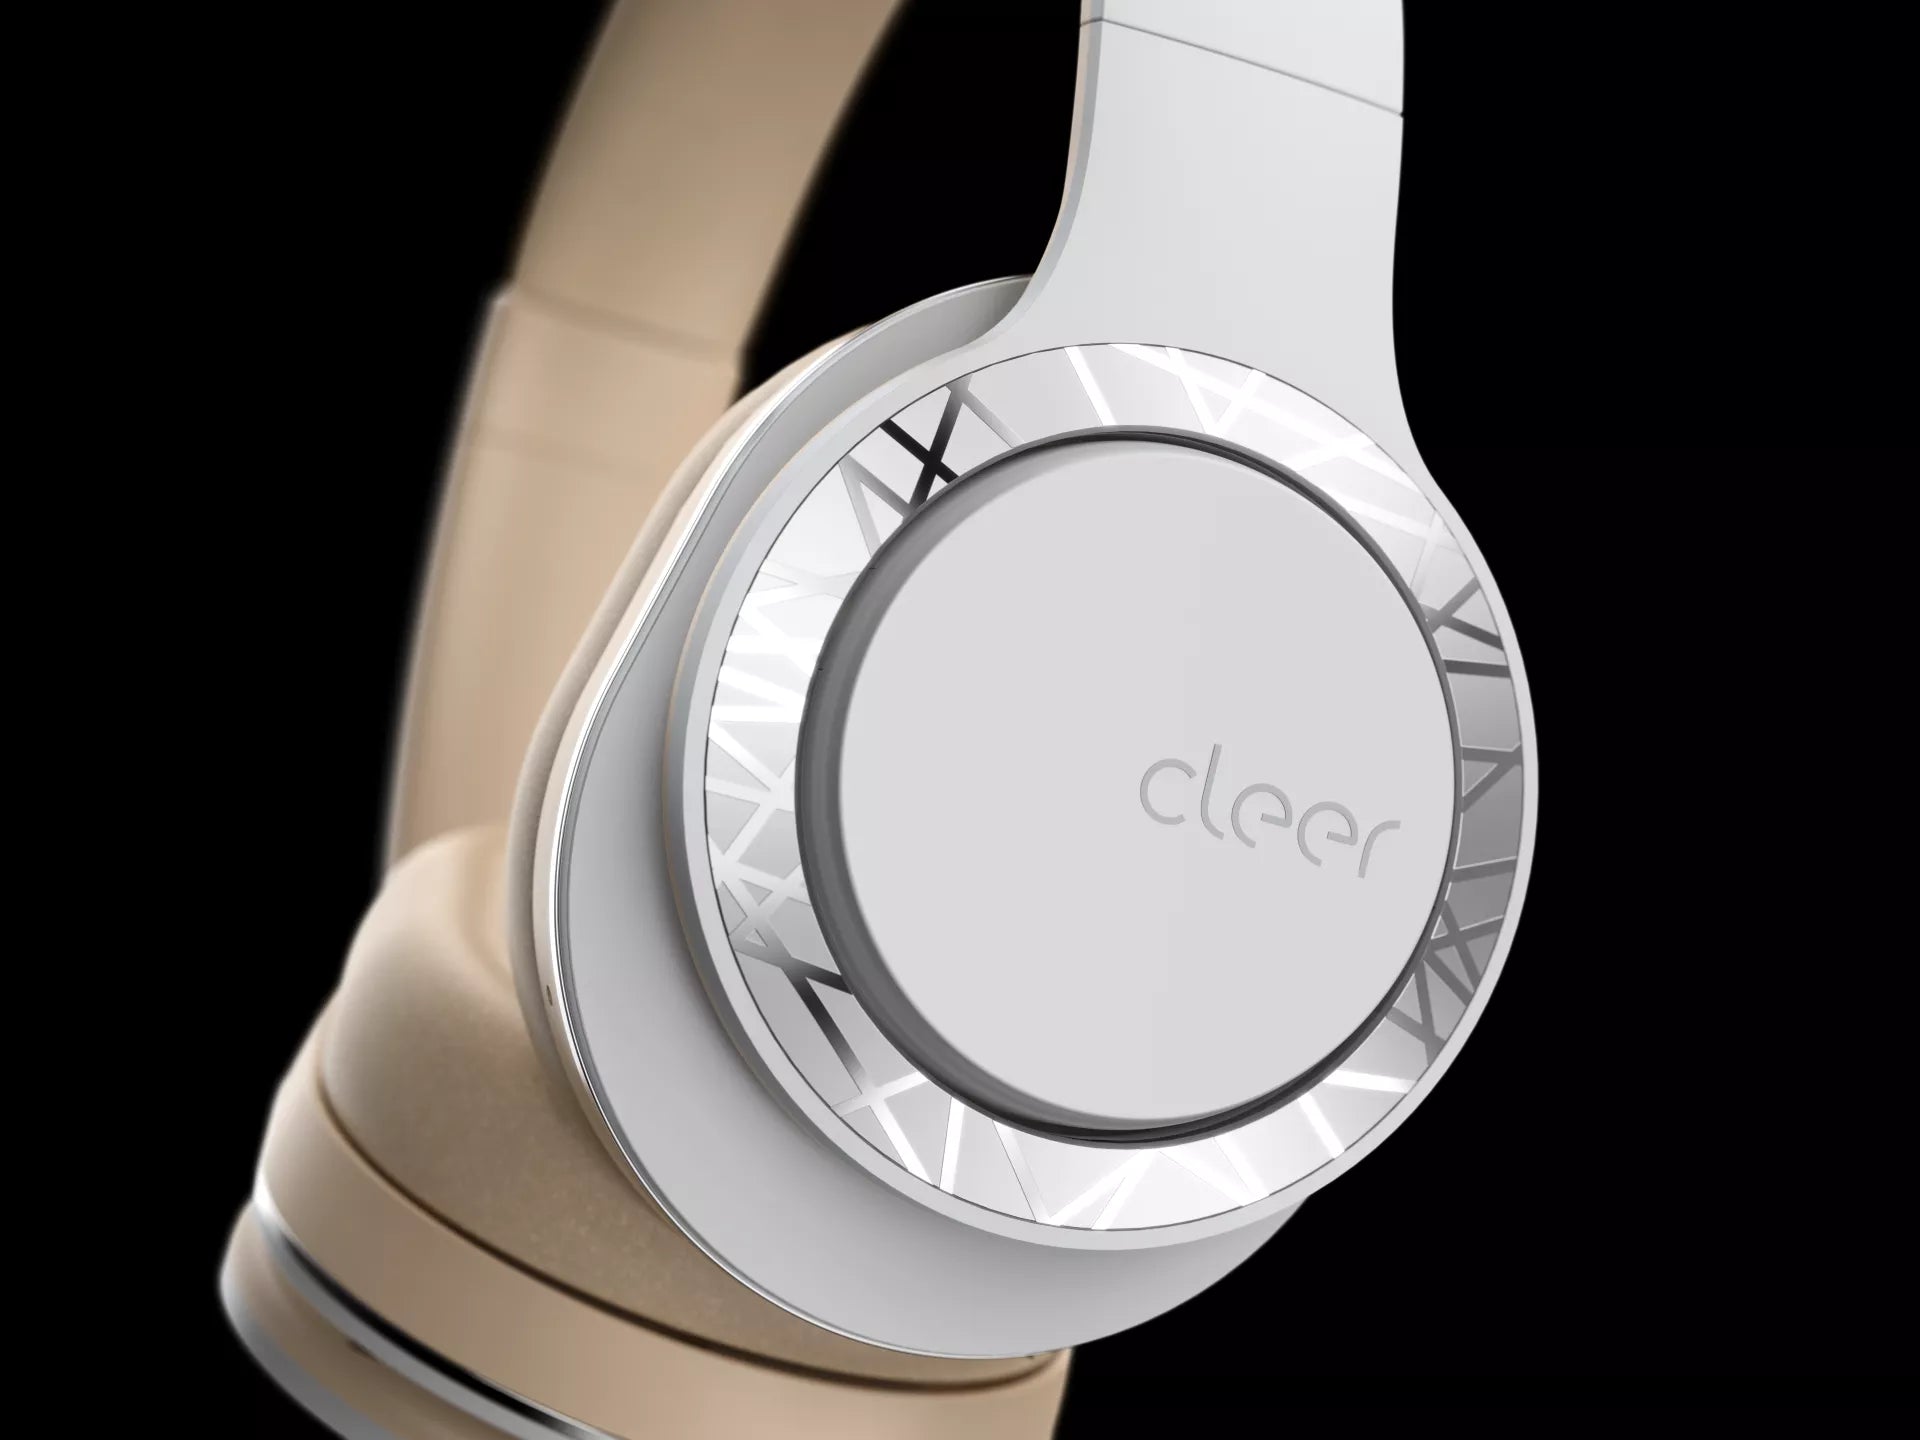 Cleer Enduro 100 - Portable Wireless Headphones